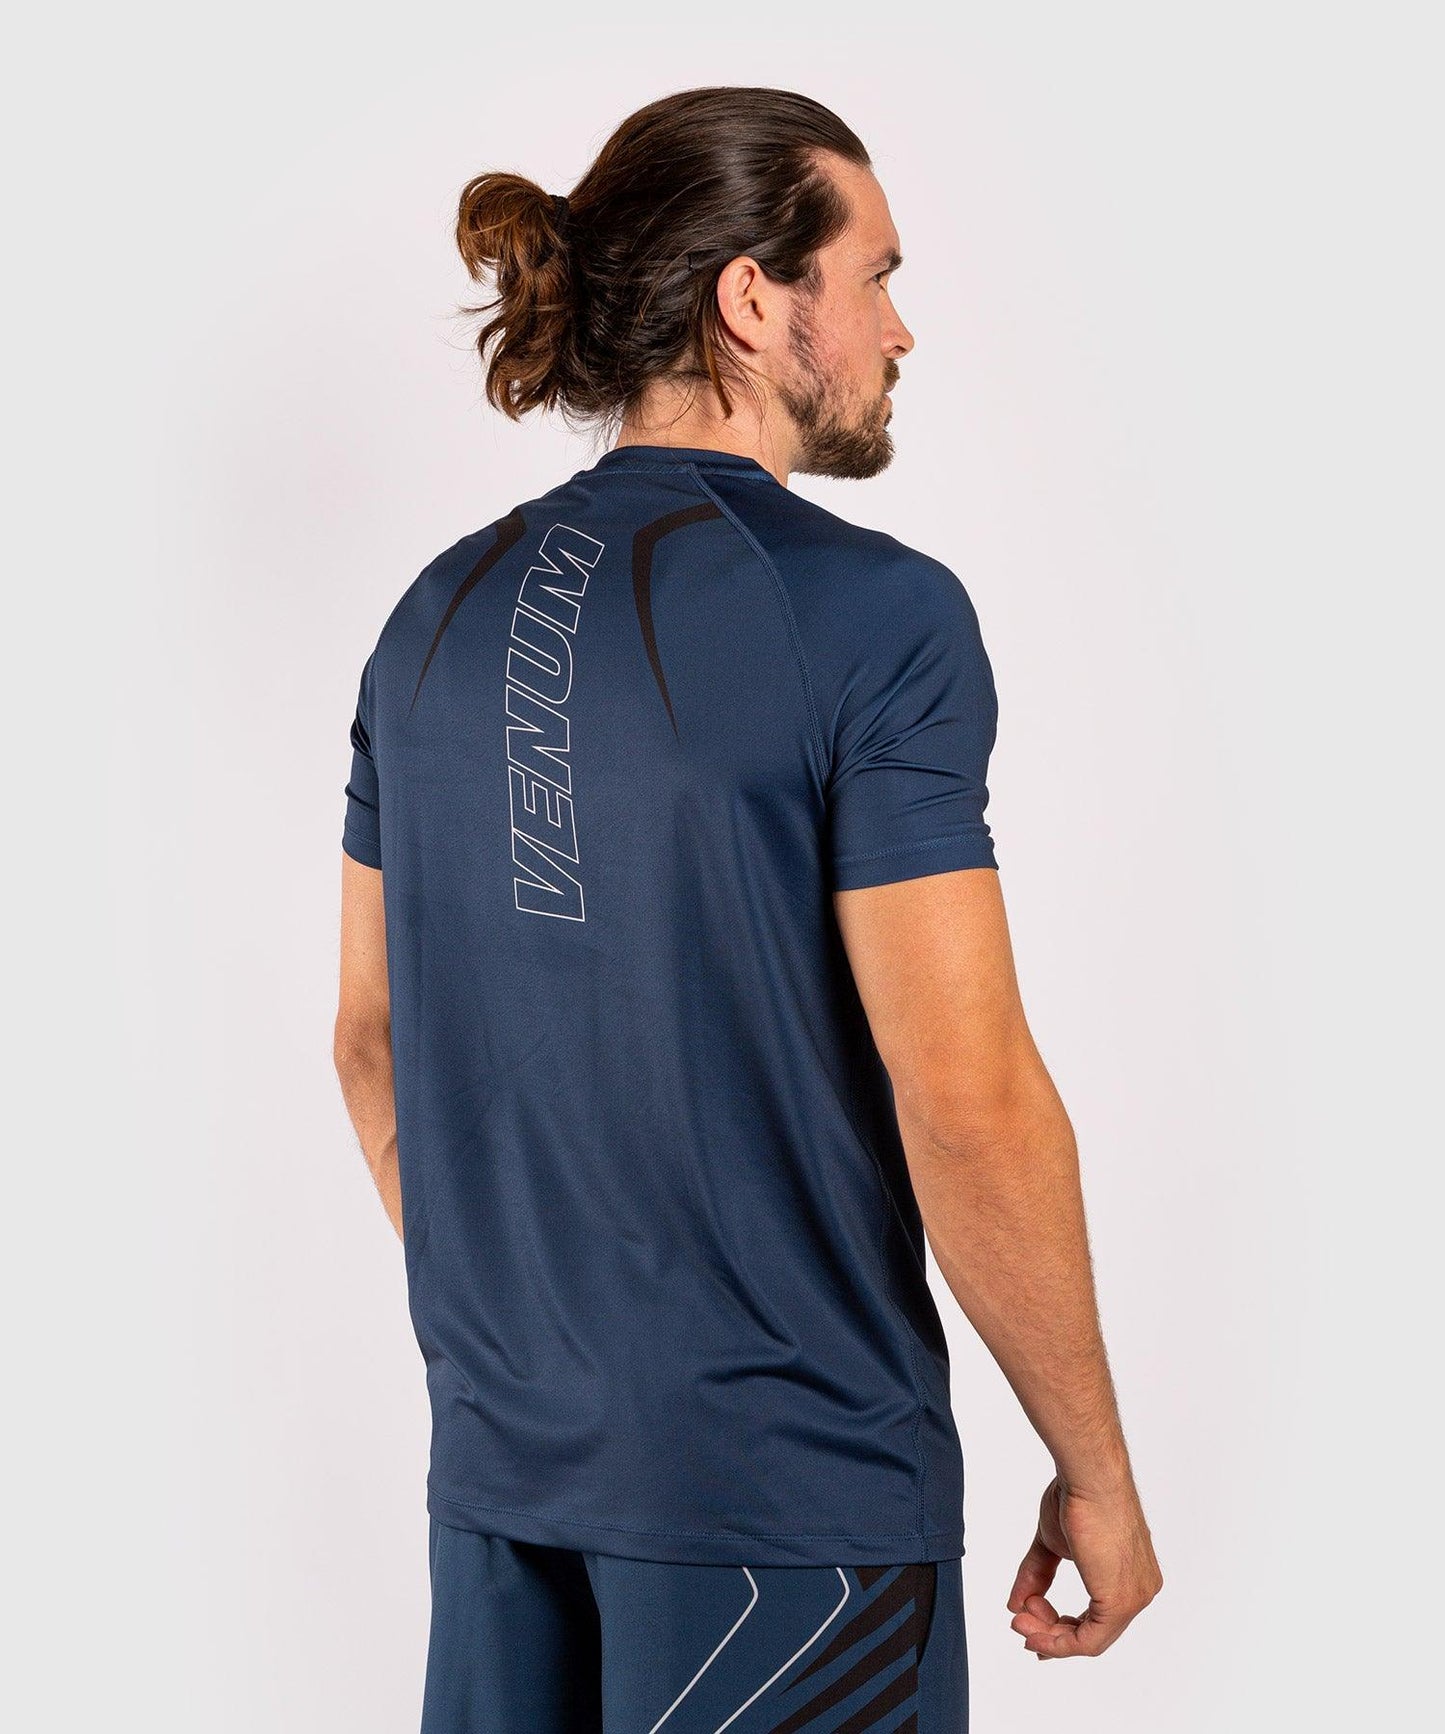 Venum Contender 5.0 Dry-Tech T-shirt - Navy/Sand Picture 5